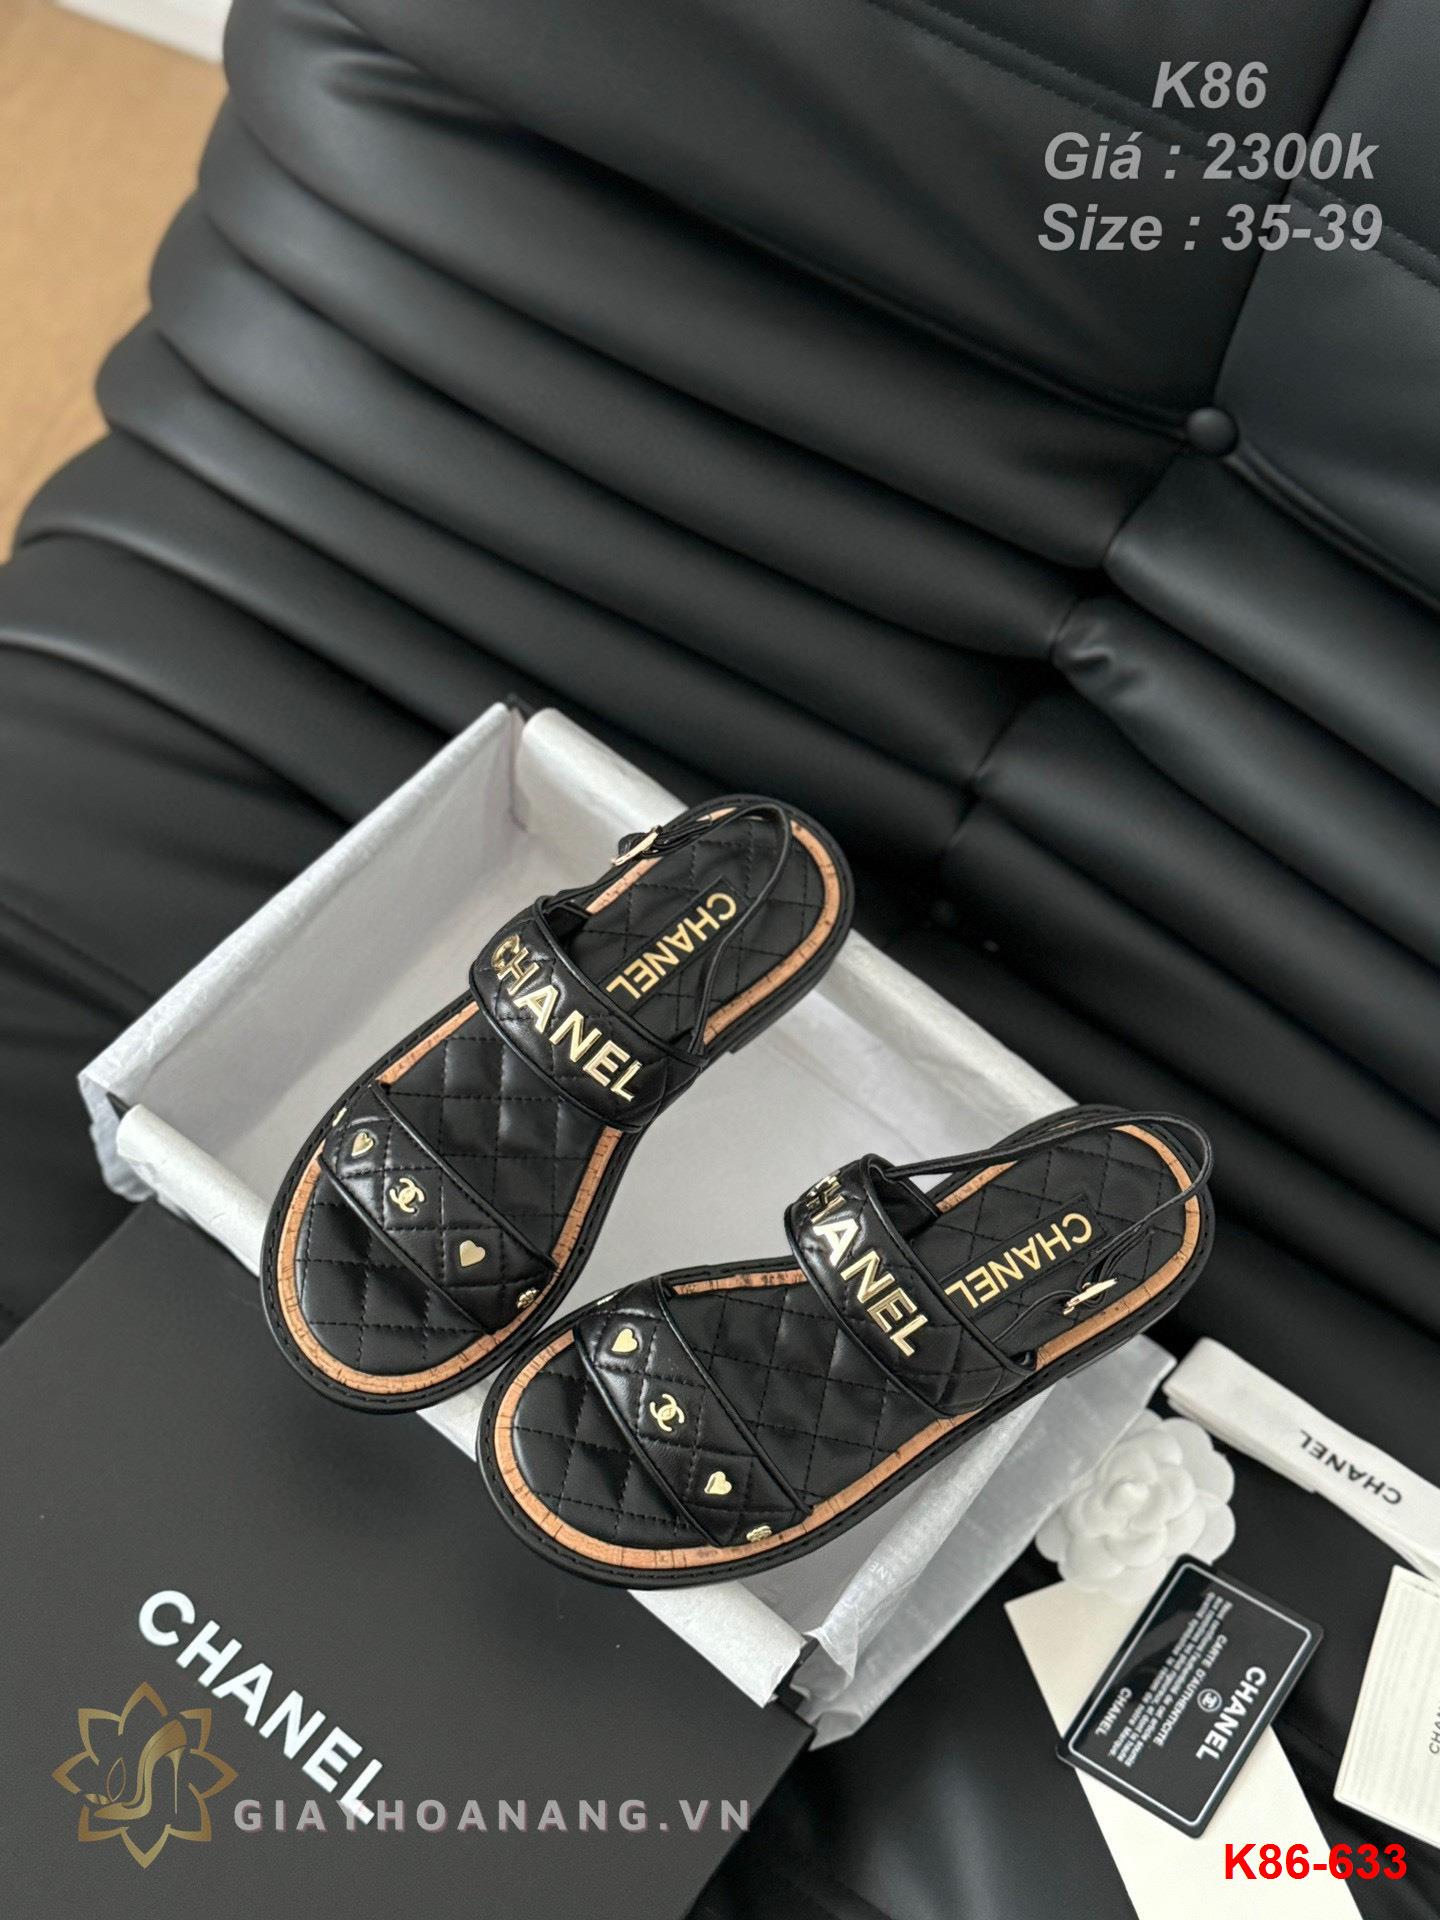 K86-633 Chanel sandal bệt siêu cấp